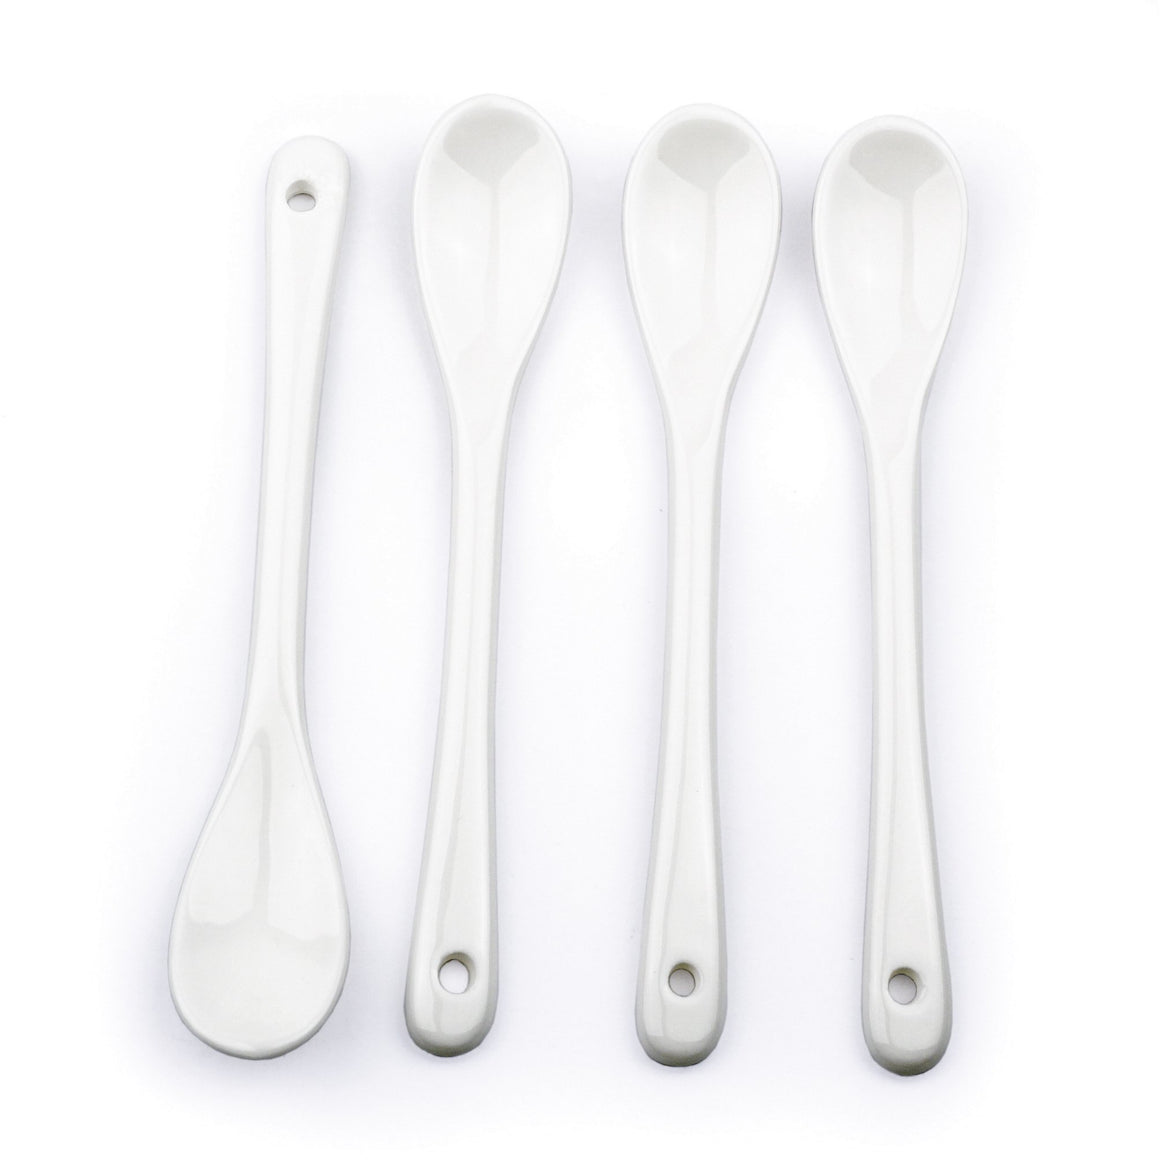 ENDURANCE® Porcelain Egg Spoons